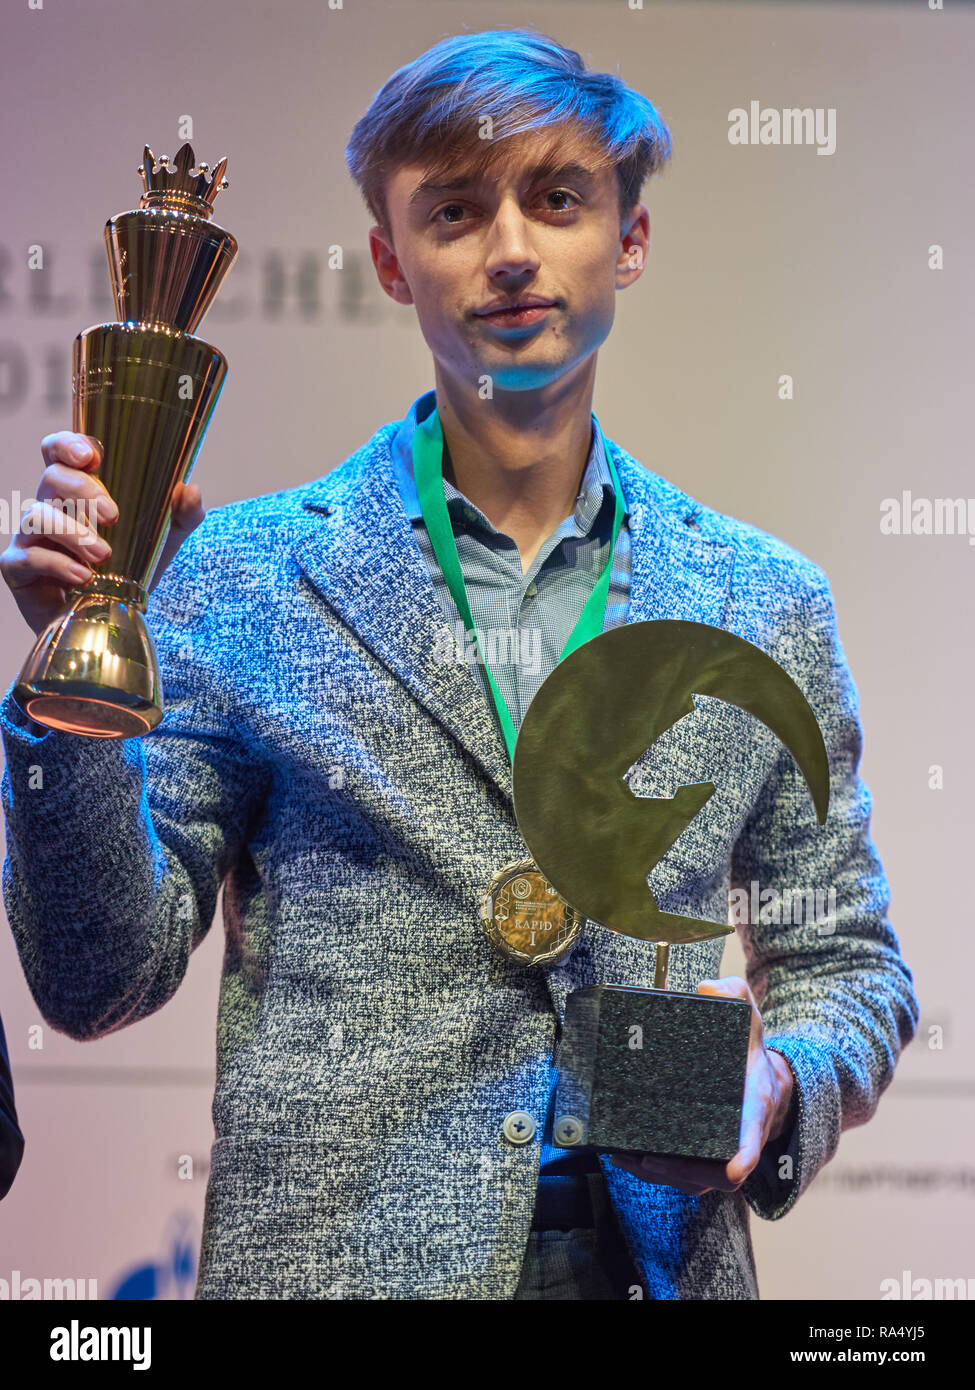 Daniil Dubov 🇷🇺 - FIDE - International Chess Federation